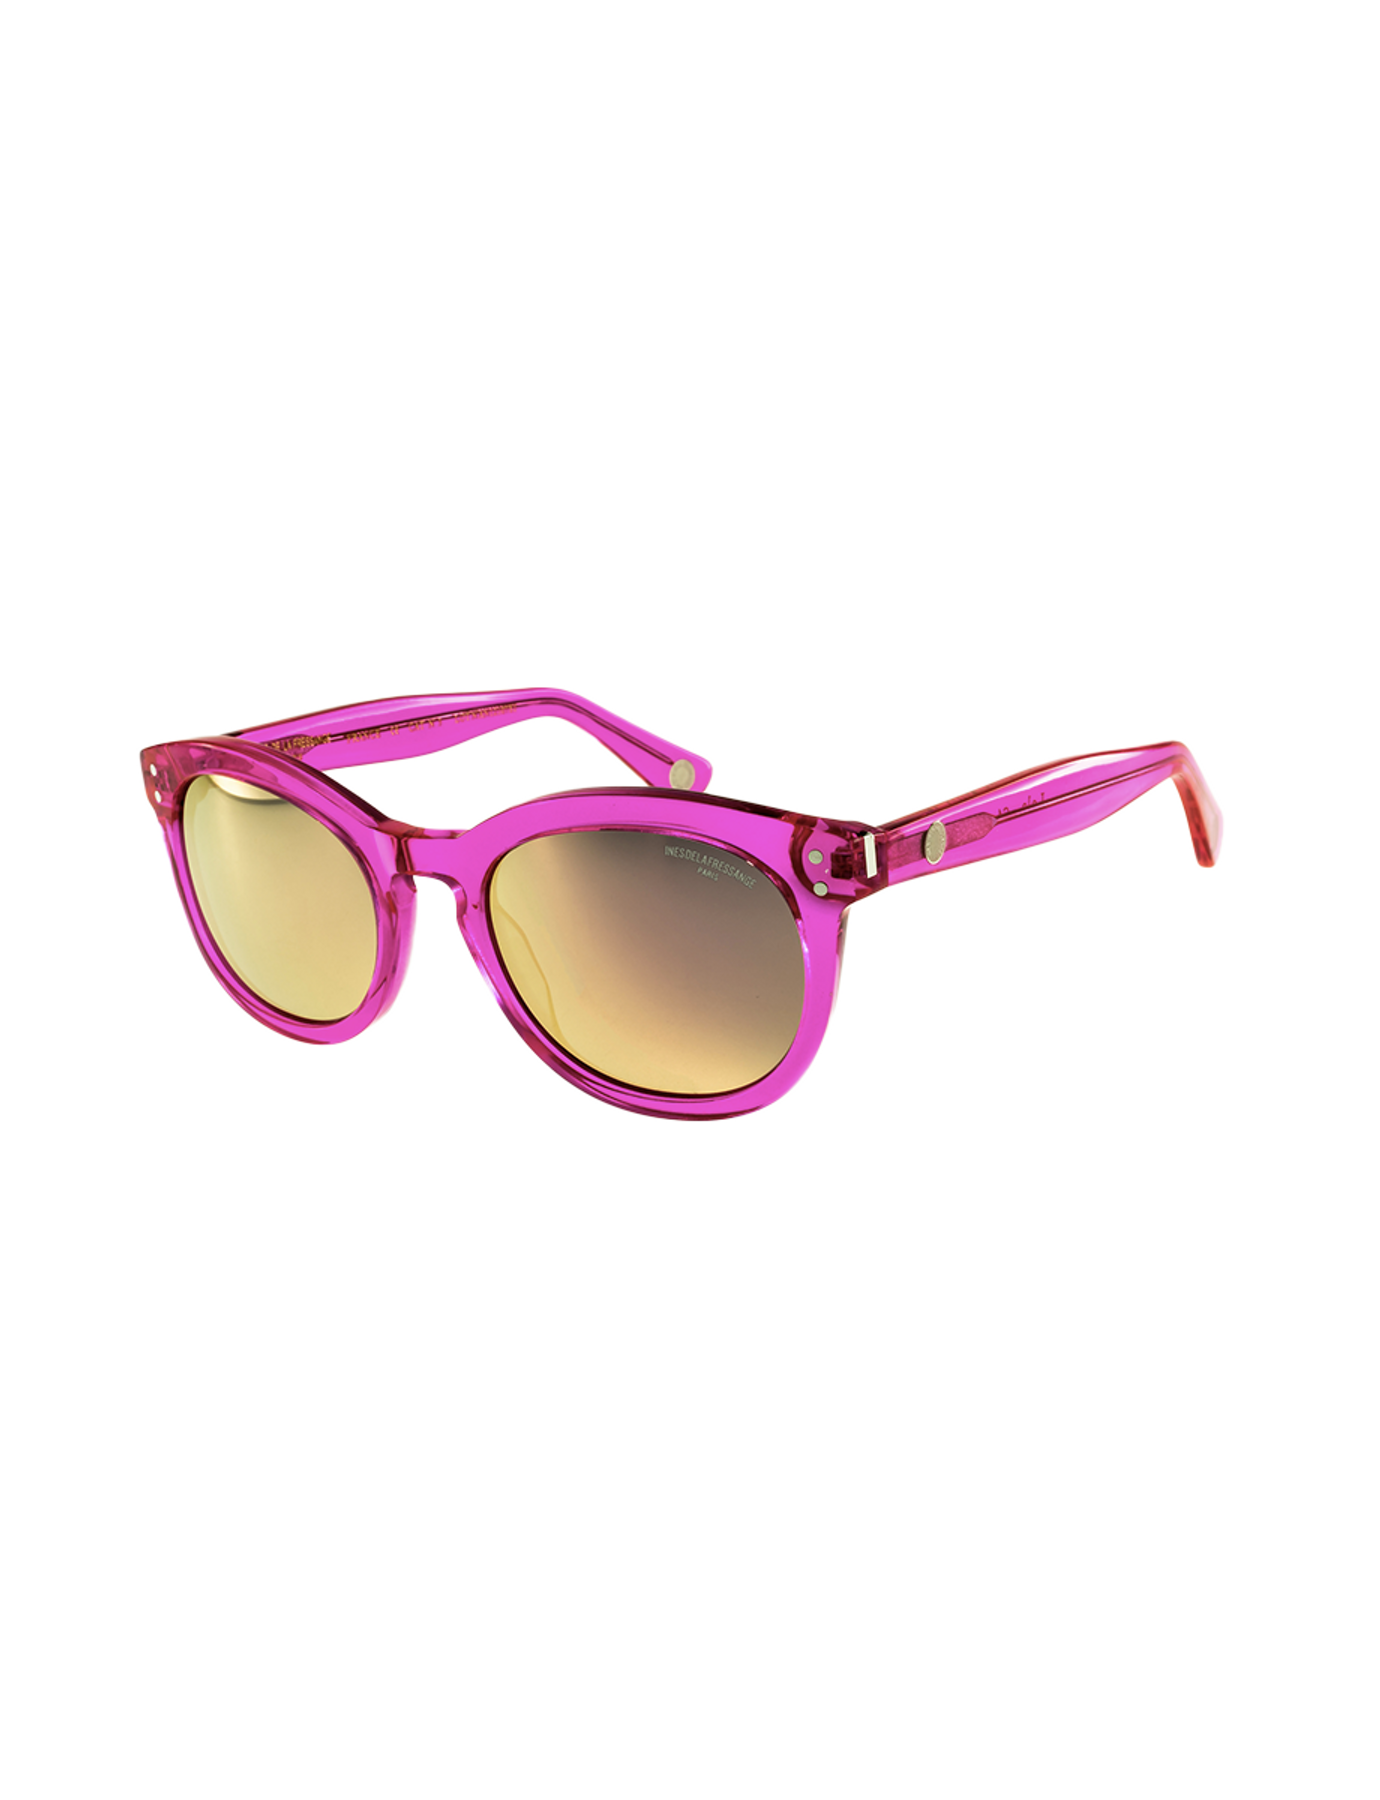 sunglasses-lola-pink-fluo